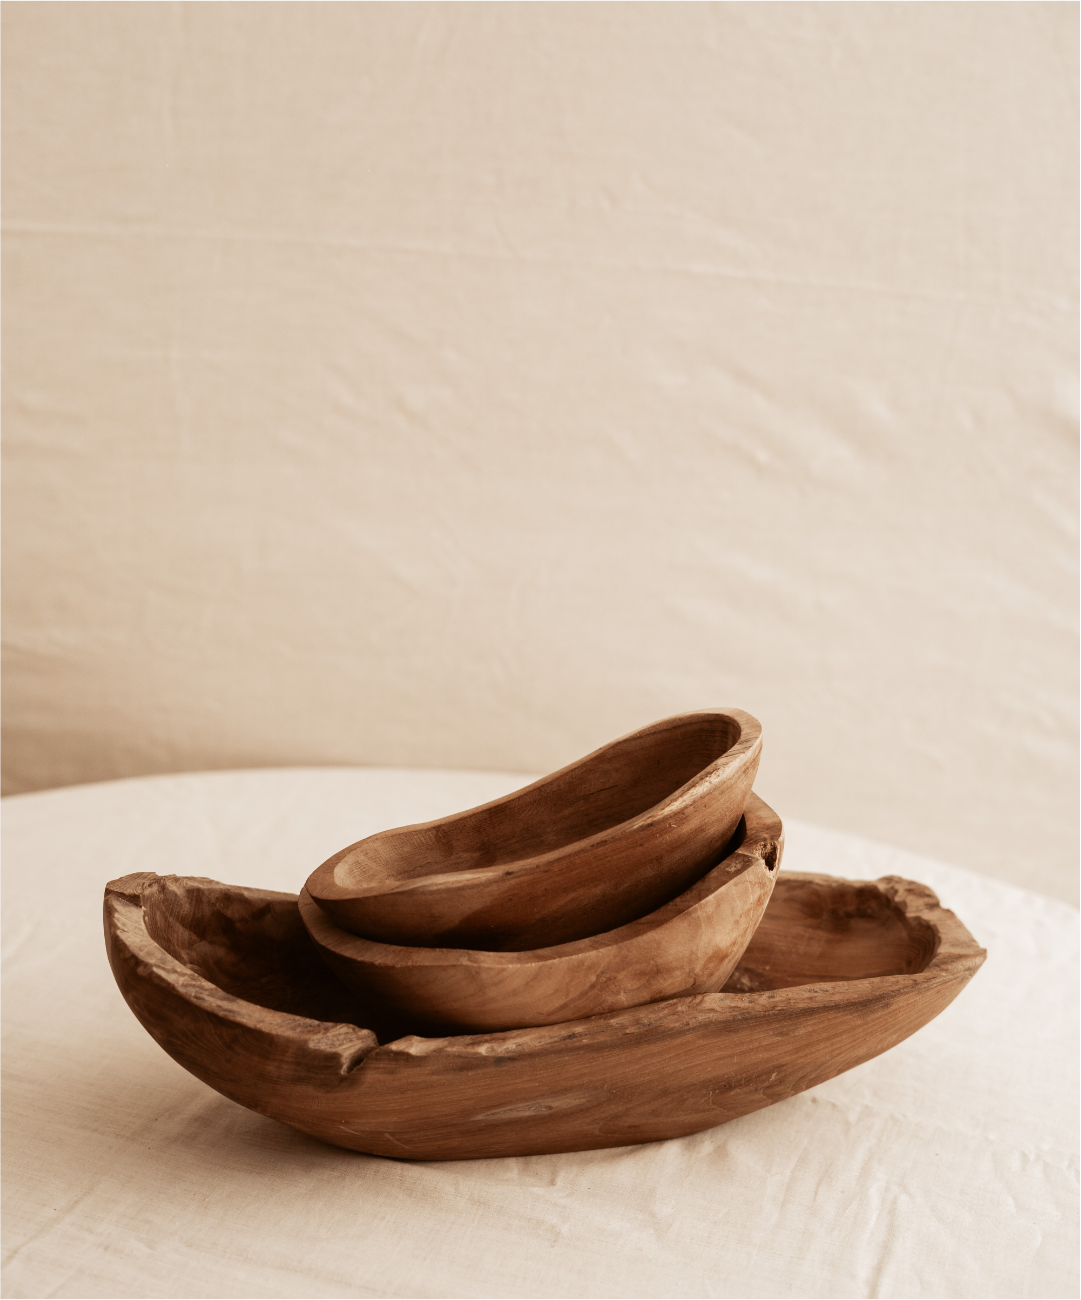 Canoe bowl